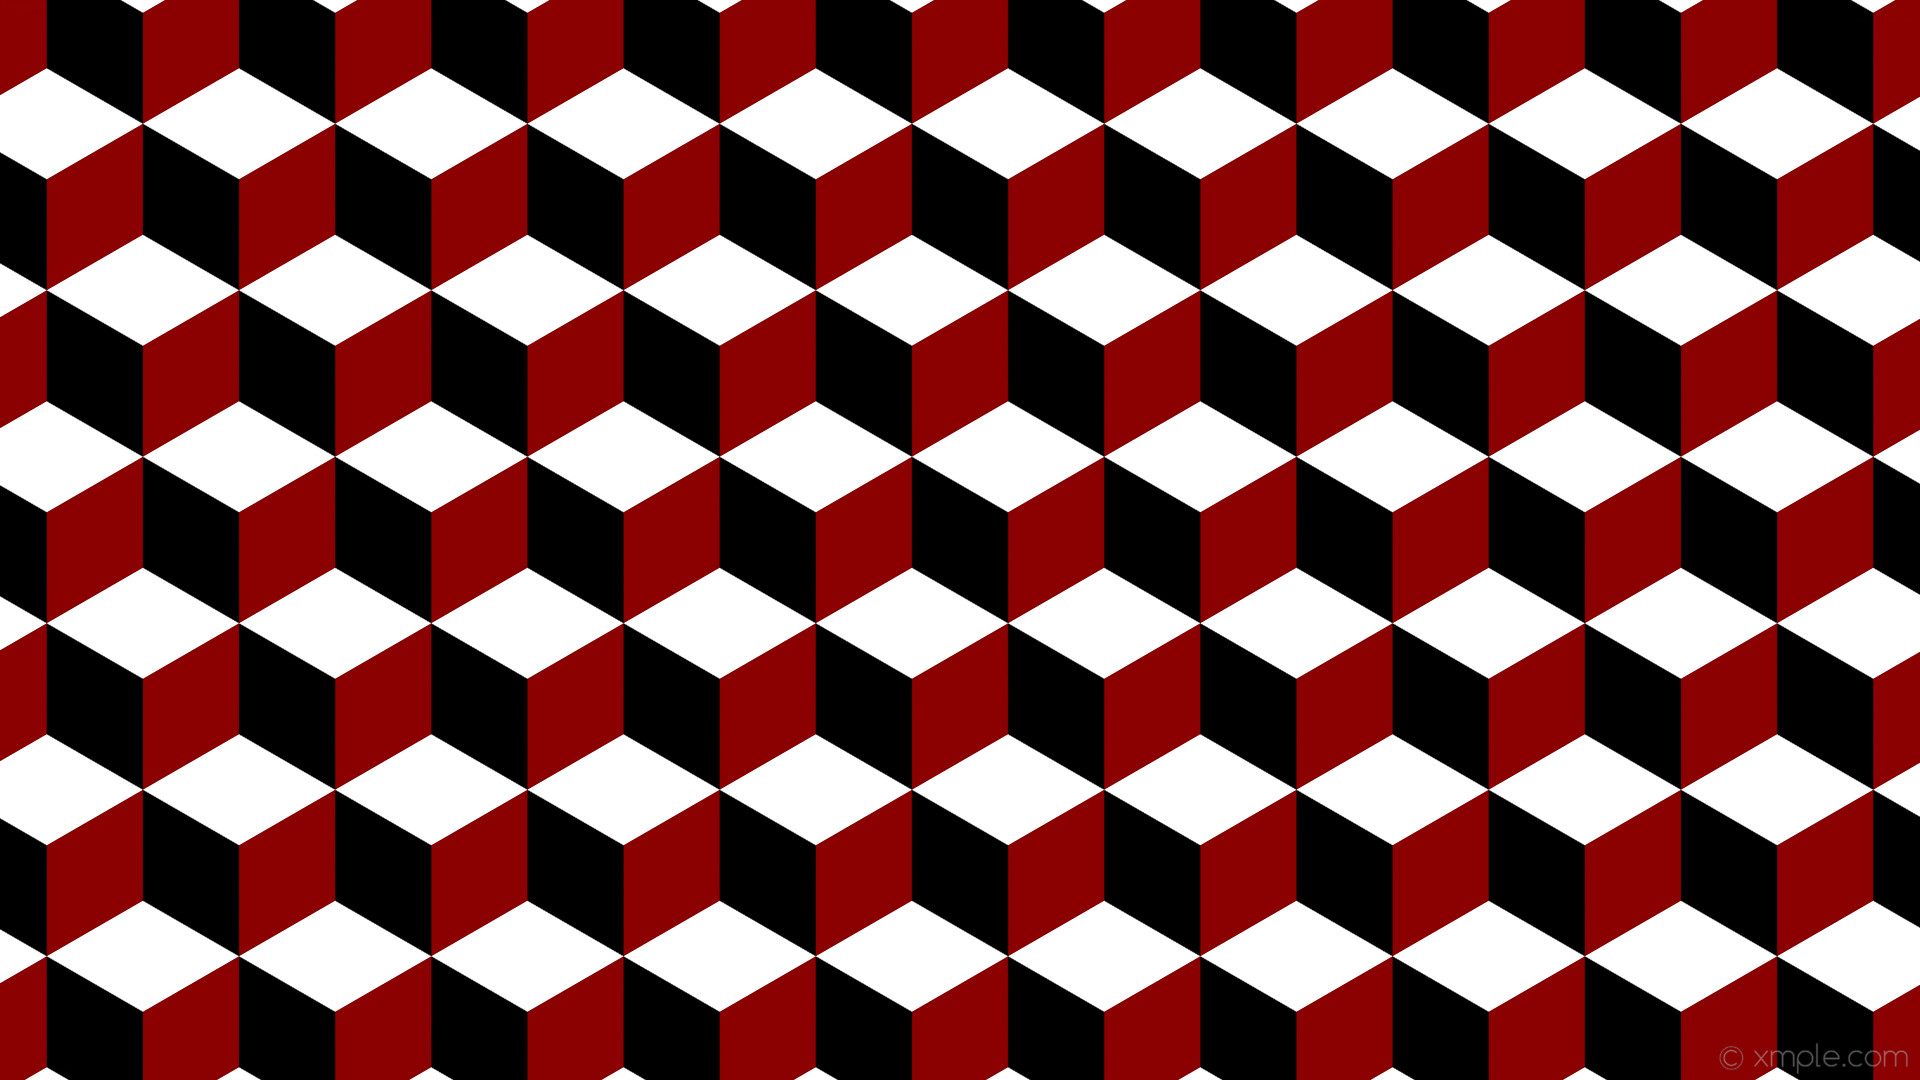 1920x1080 wallpaper white 3d cubes red black dark red #000000 #8b0000 #ffffff 300Â°